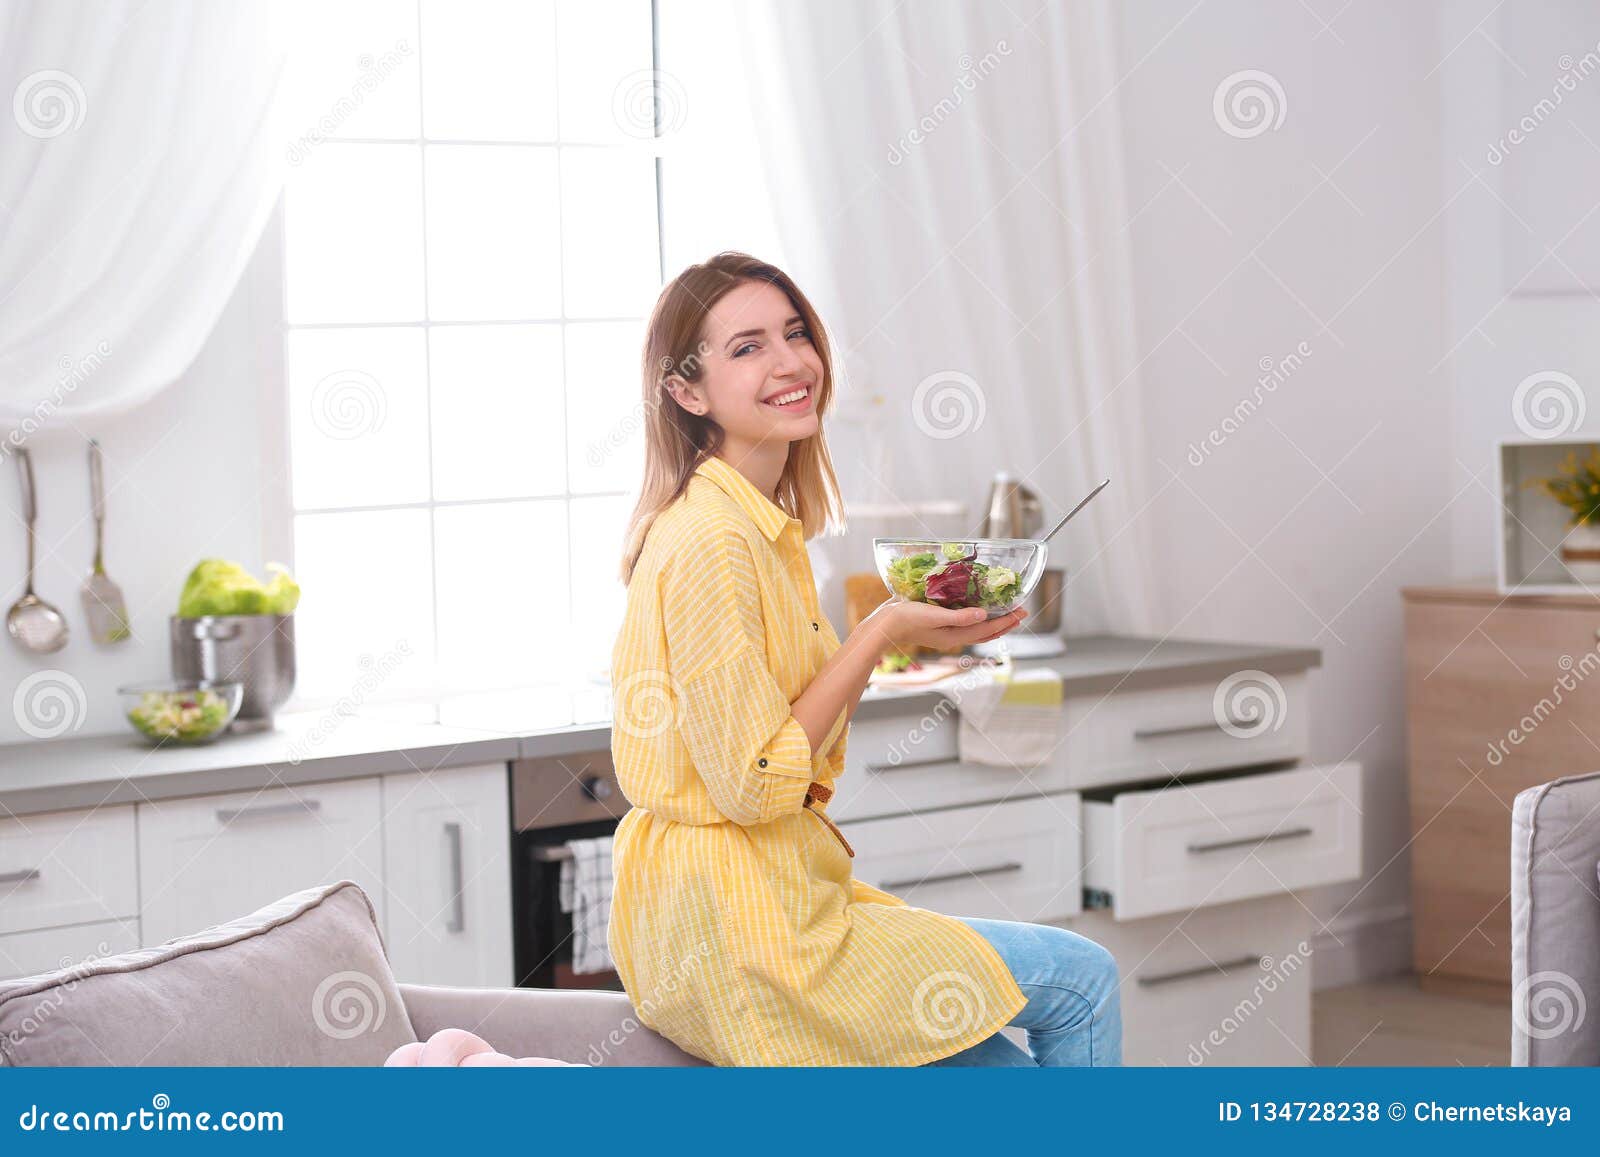 Happy young woman eating salad in kitche. Lycklig ung kvinna som äter sallad i kök banta sunt